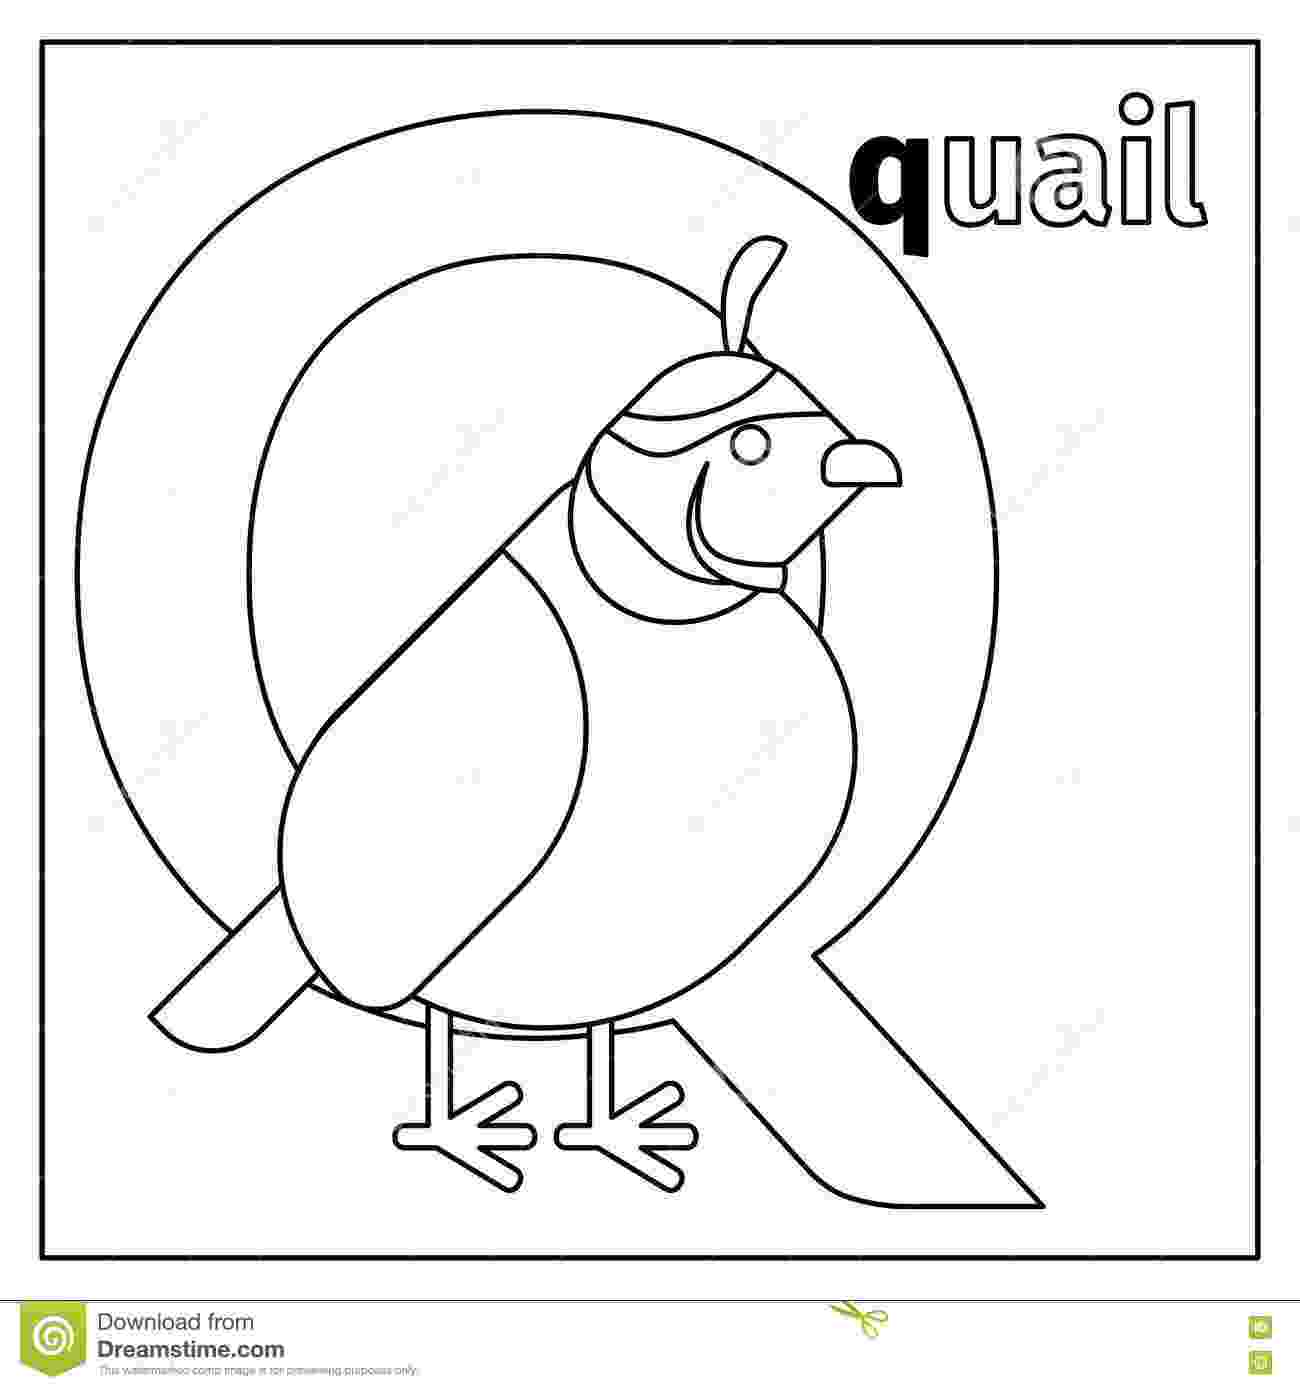 coloring picture quail quail letter q coloring page stock vector illustration quail coloring picture 